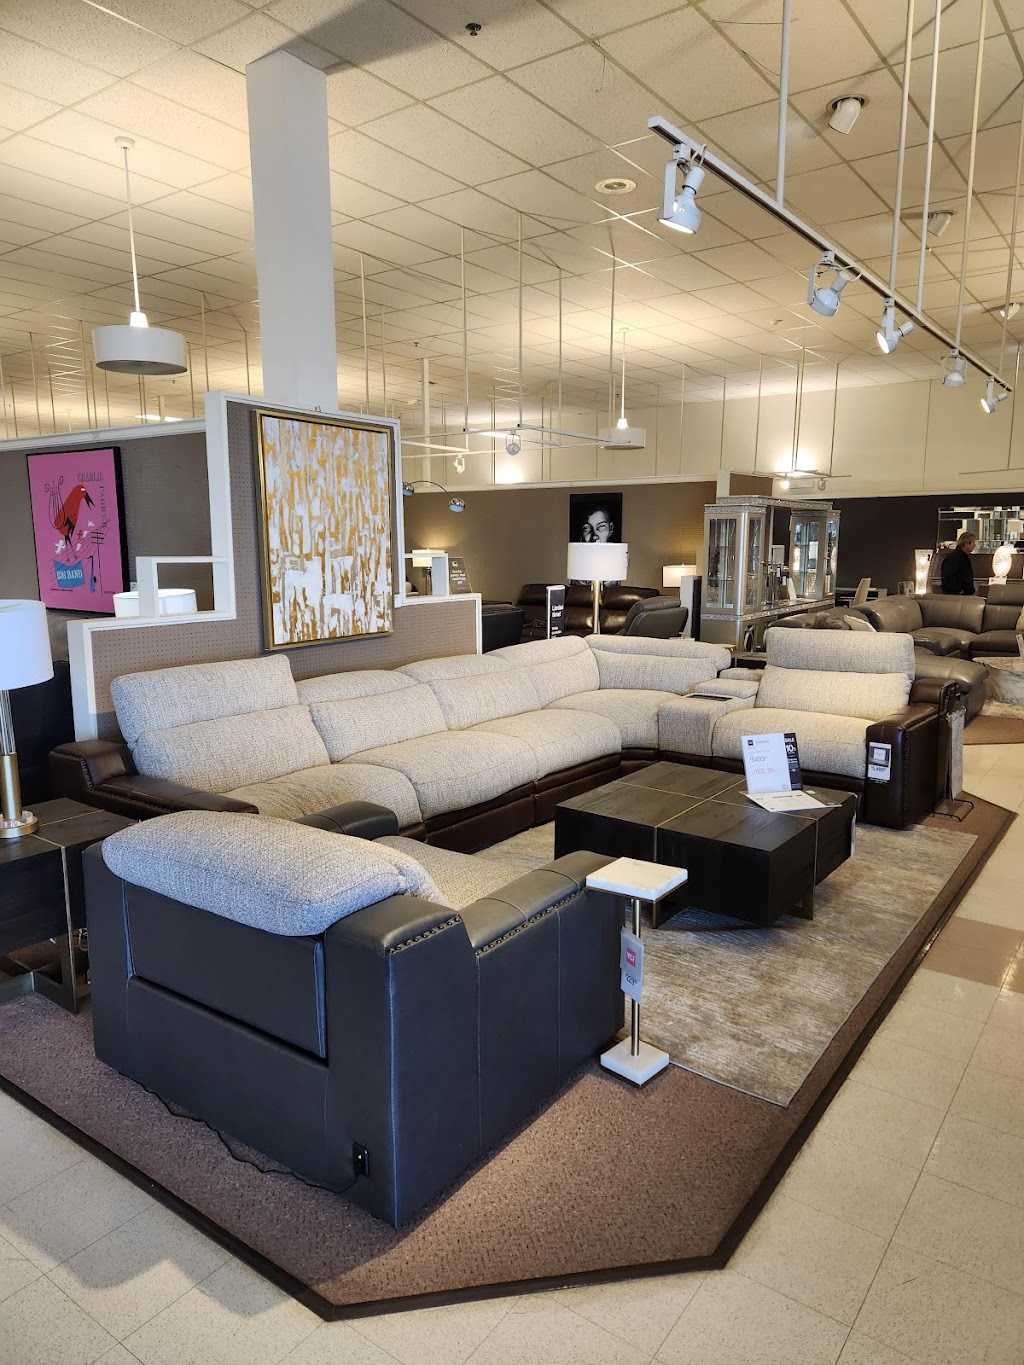 Value City Furniture | 23859 Eureka Rd, Taylor, MI 48180, USA | Phone: (734) 287-0401